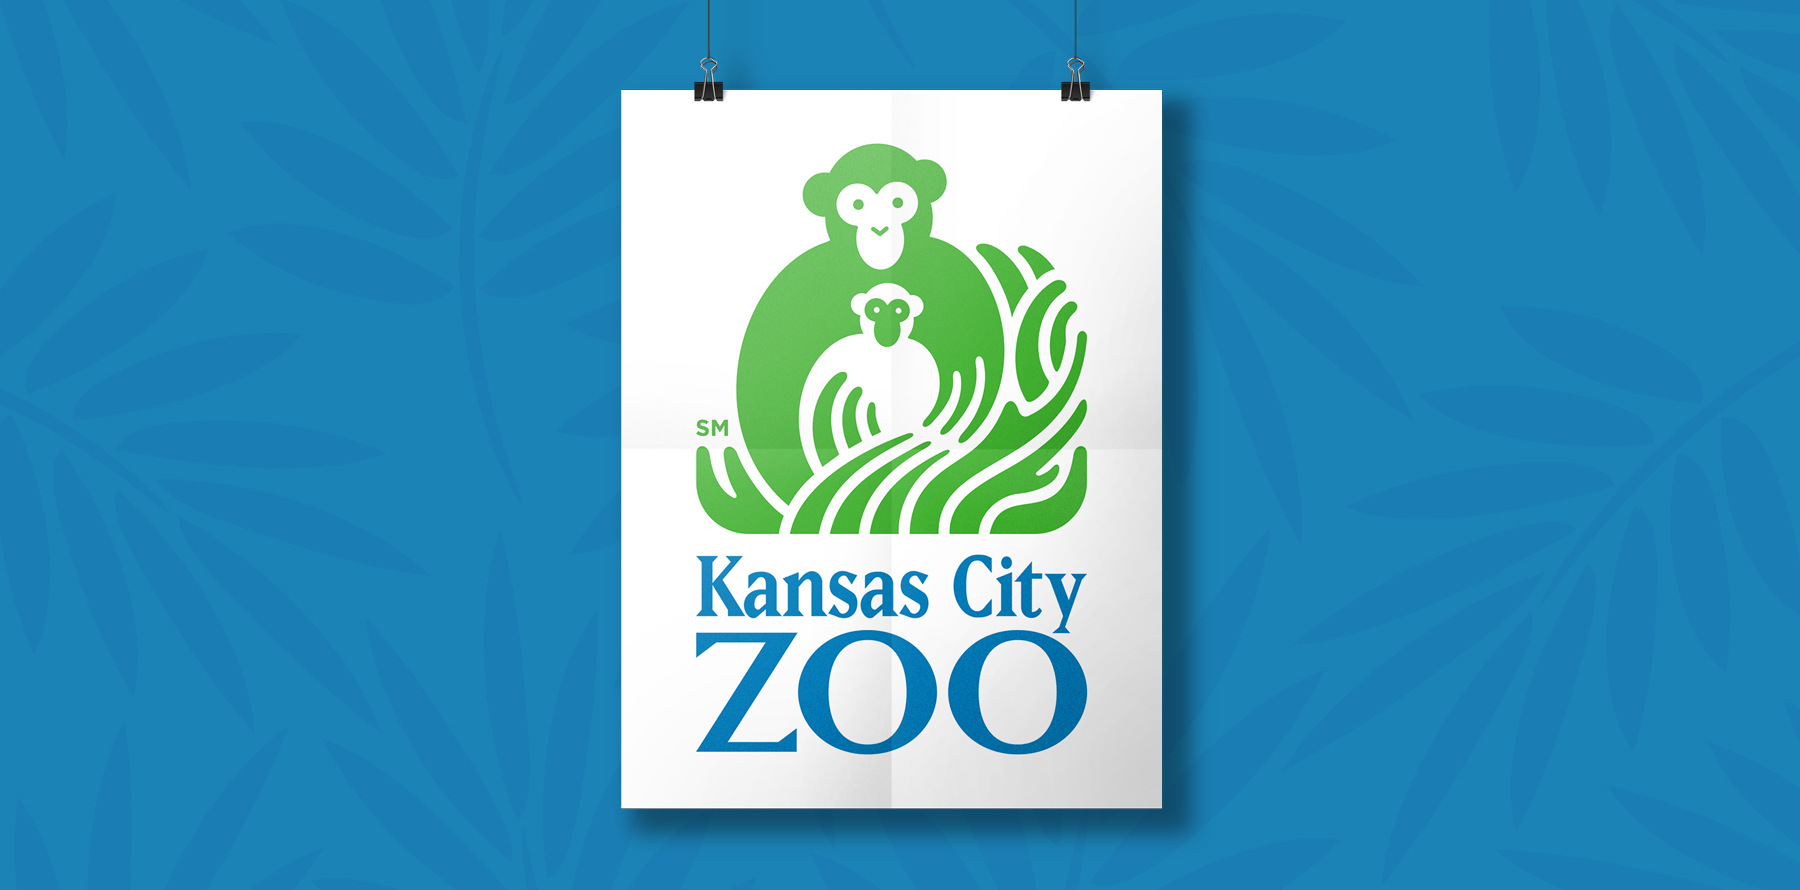 Logo Design For The Kansas City Zoo